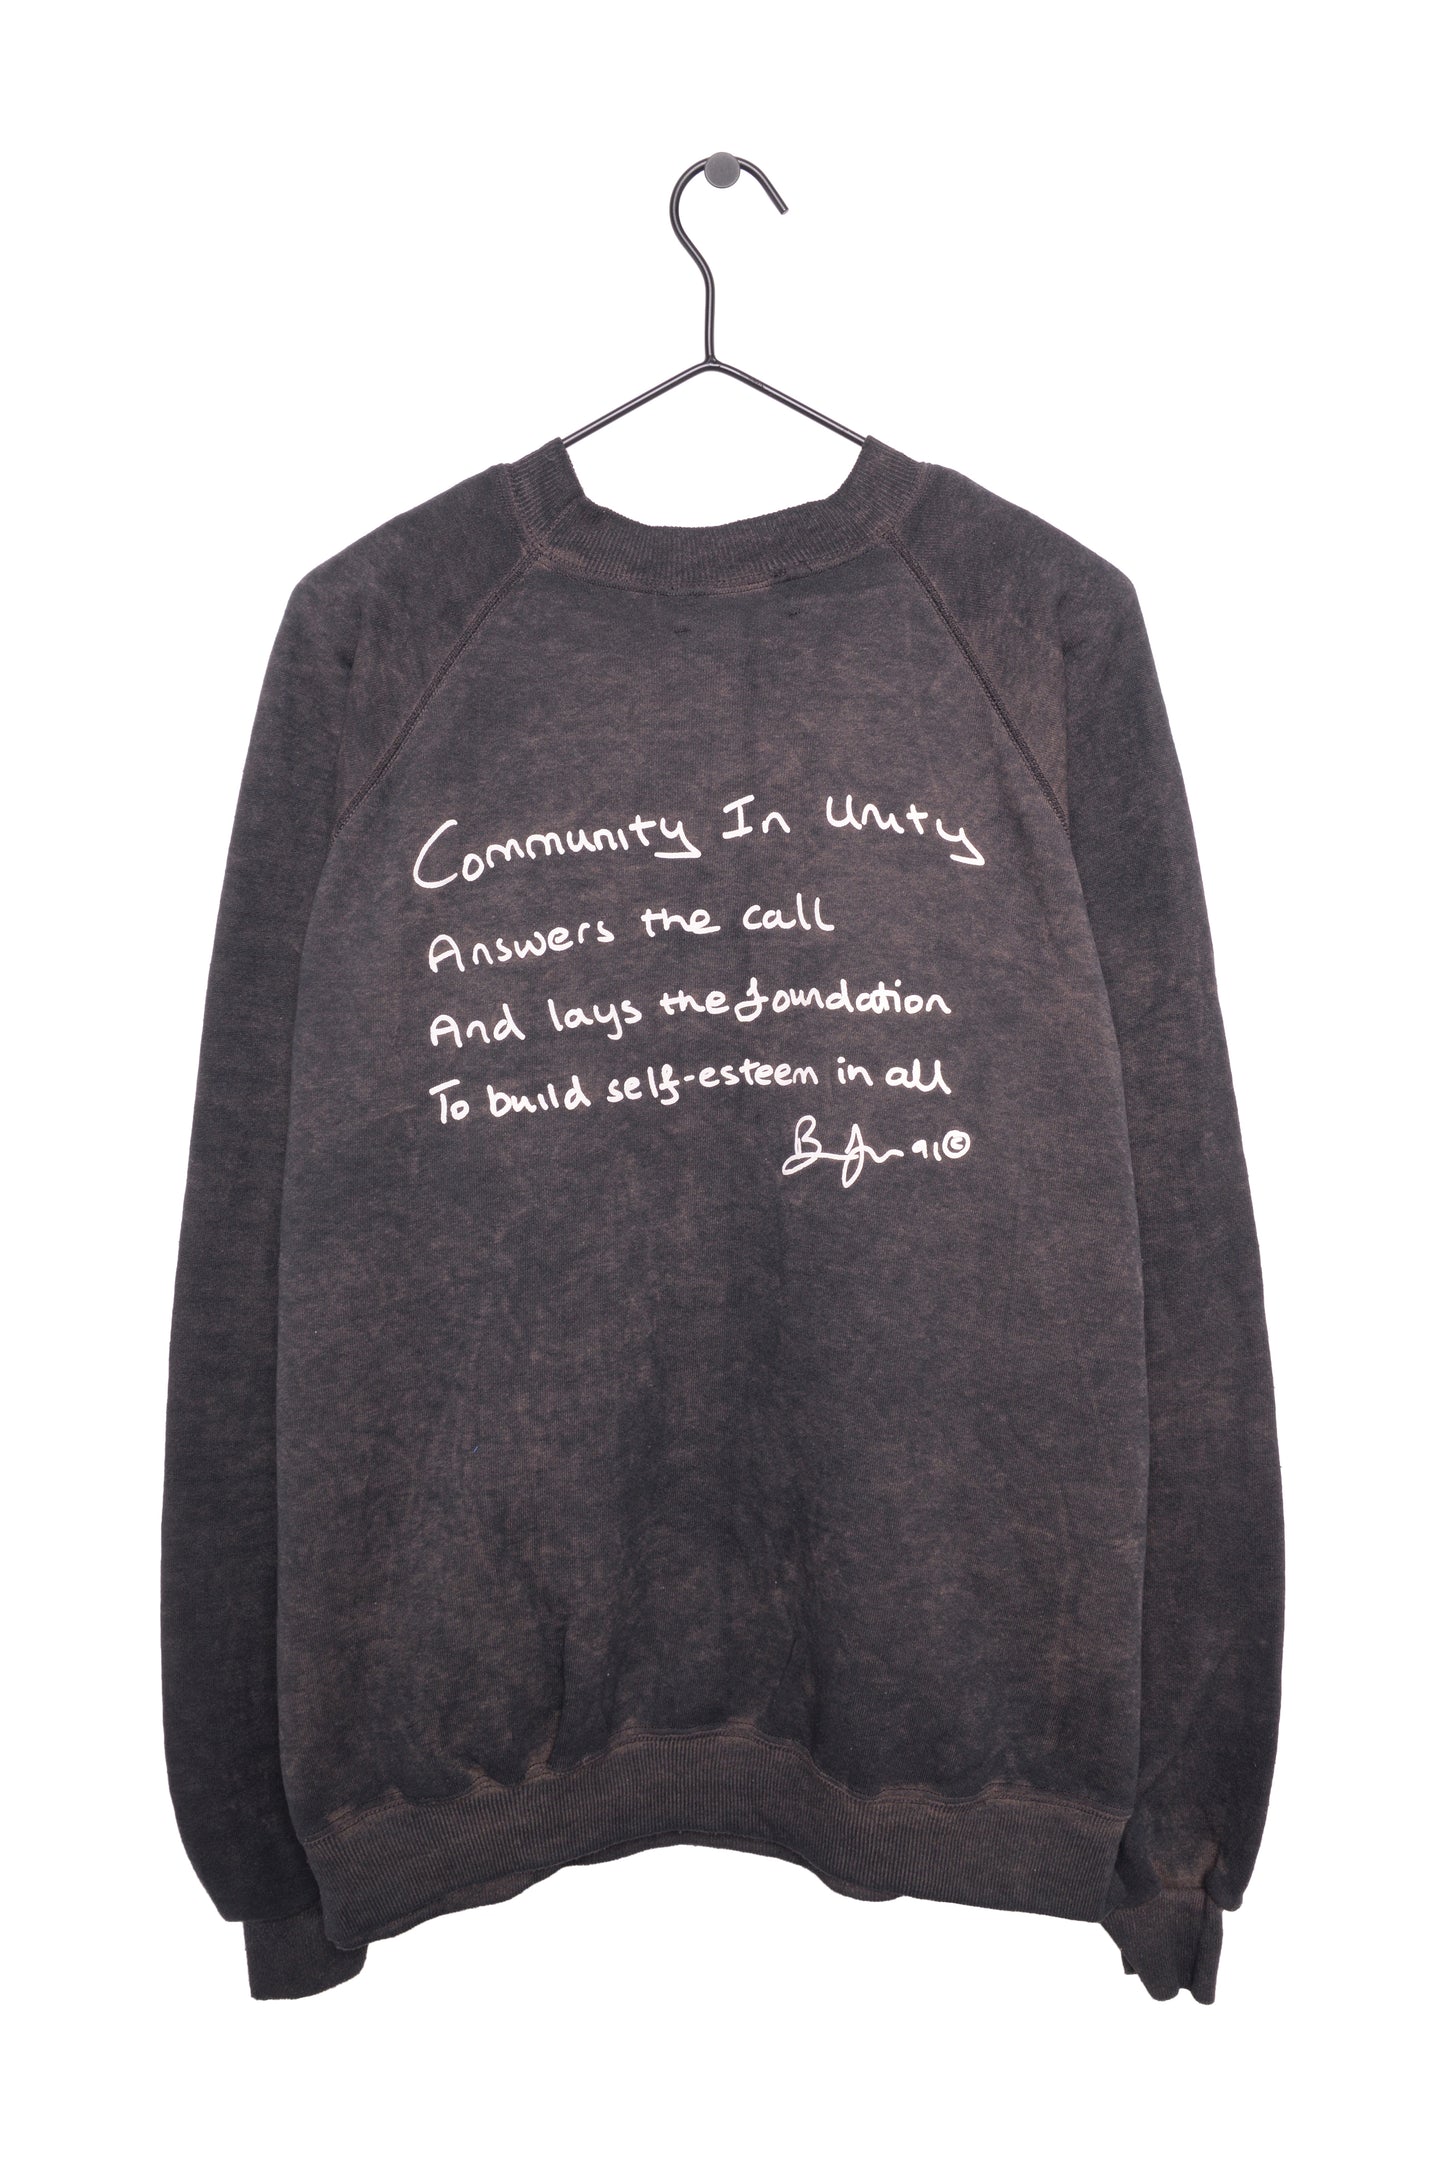 1991 Community in Unity Sweatshirt USA